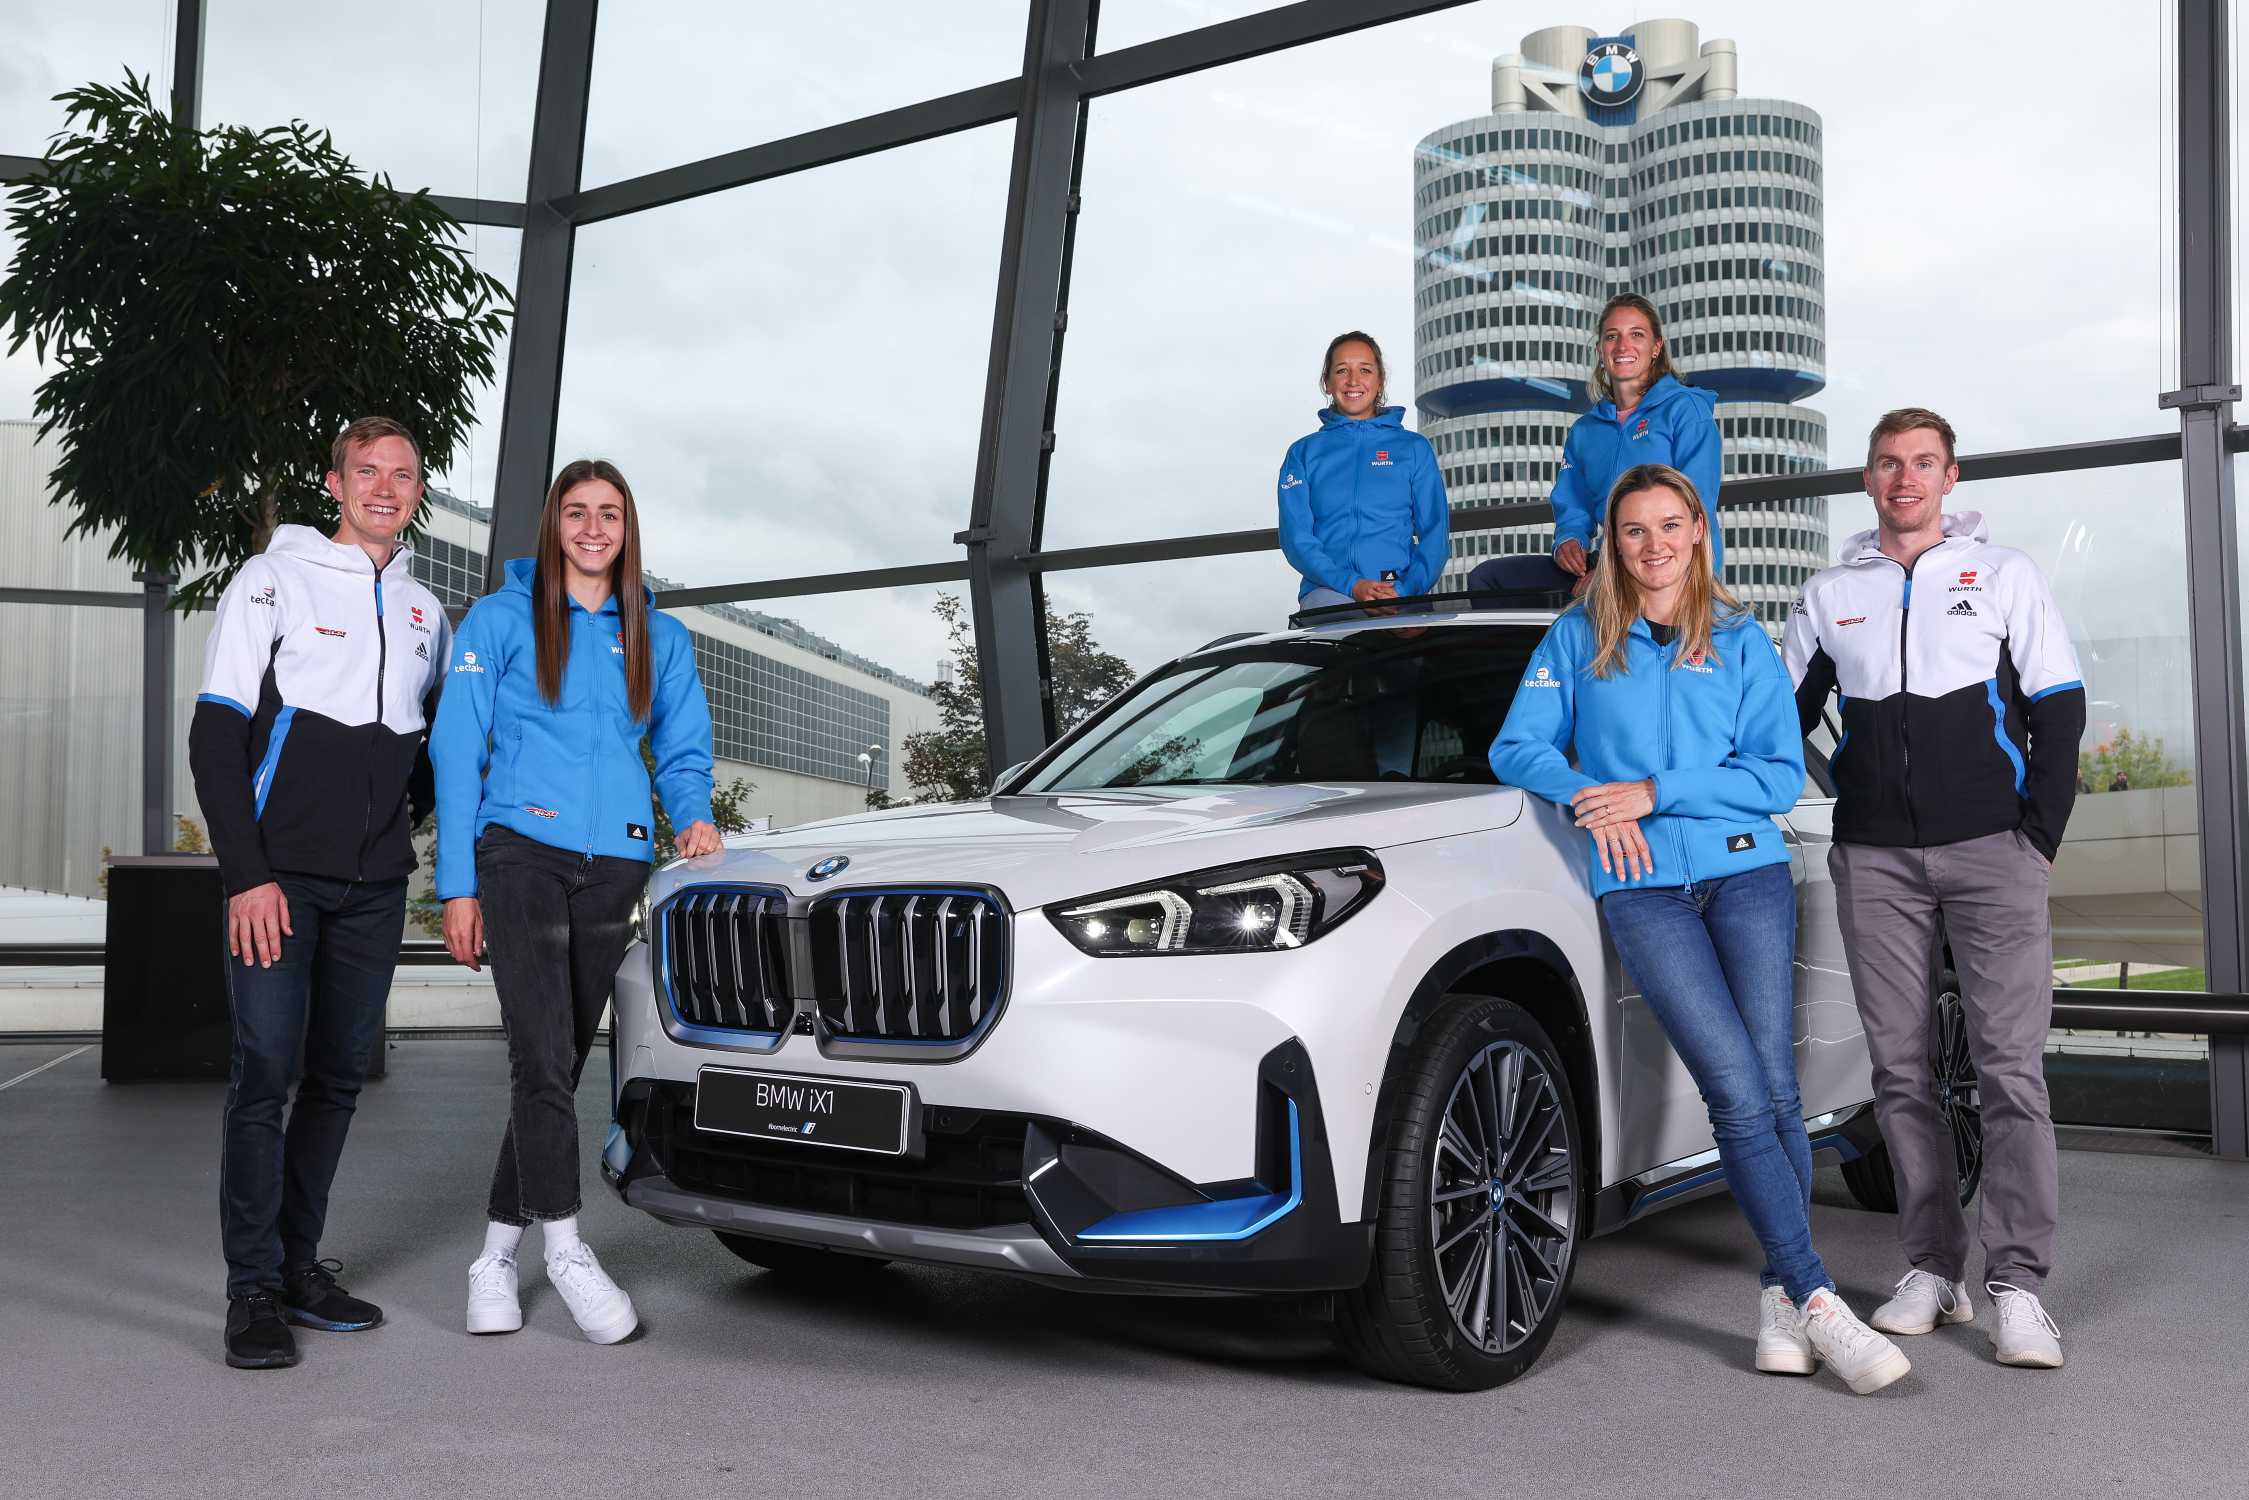 LaVita named as new Main Sponsor of BMW IBU World Cup Biathlon